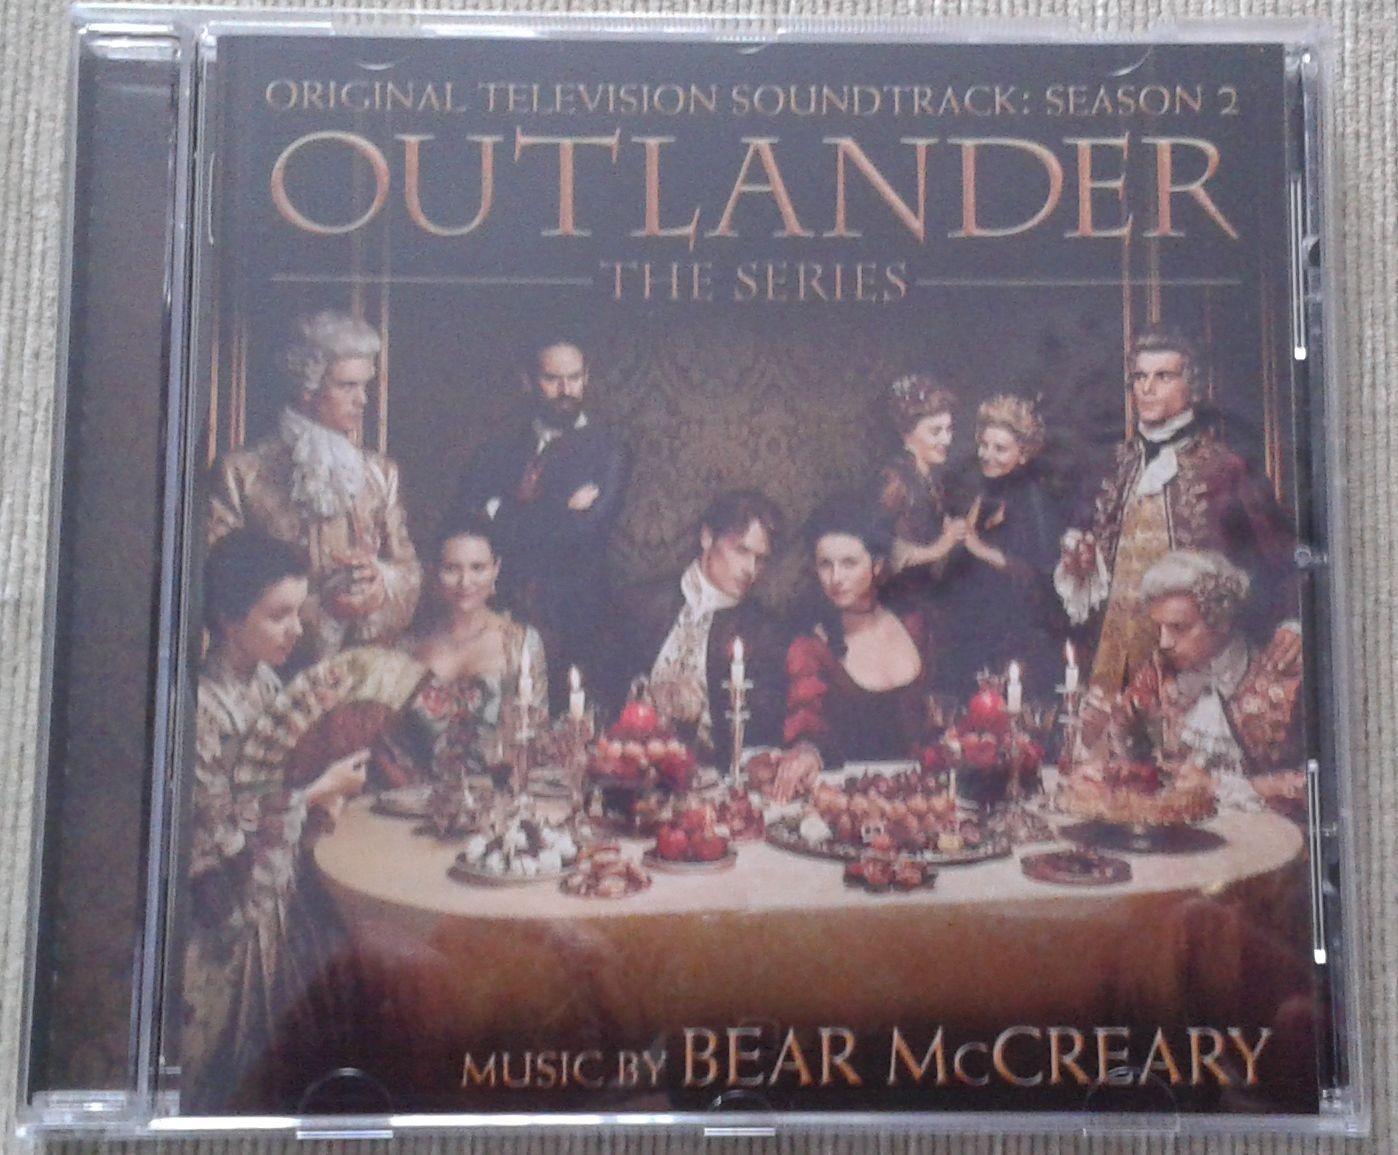 1. Outlander 2 front 1CD Sony.jpg